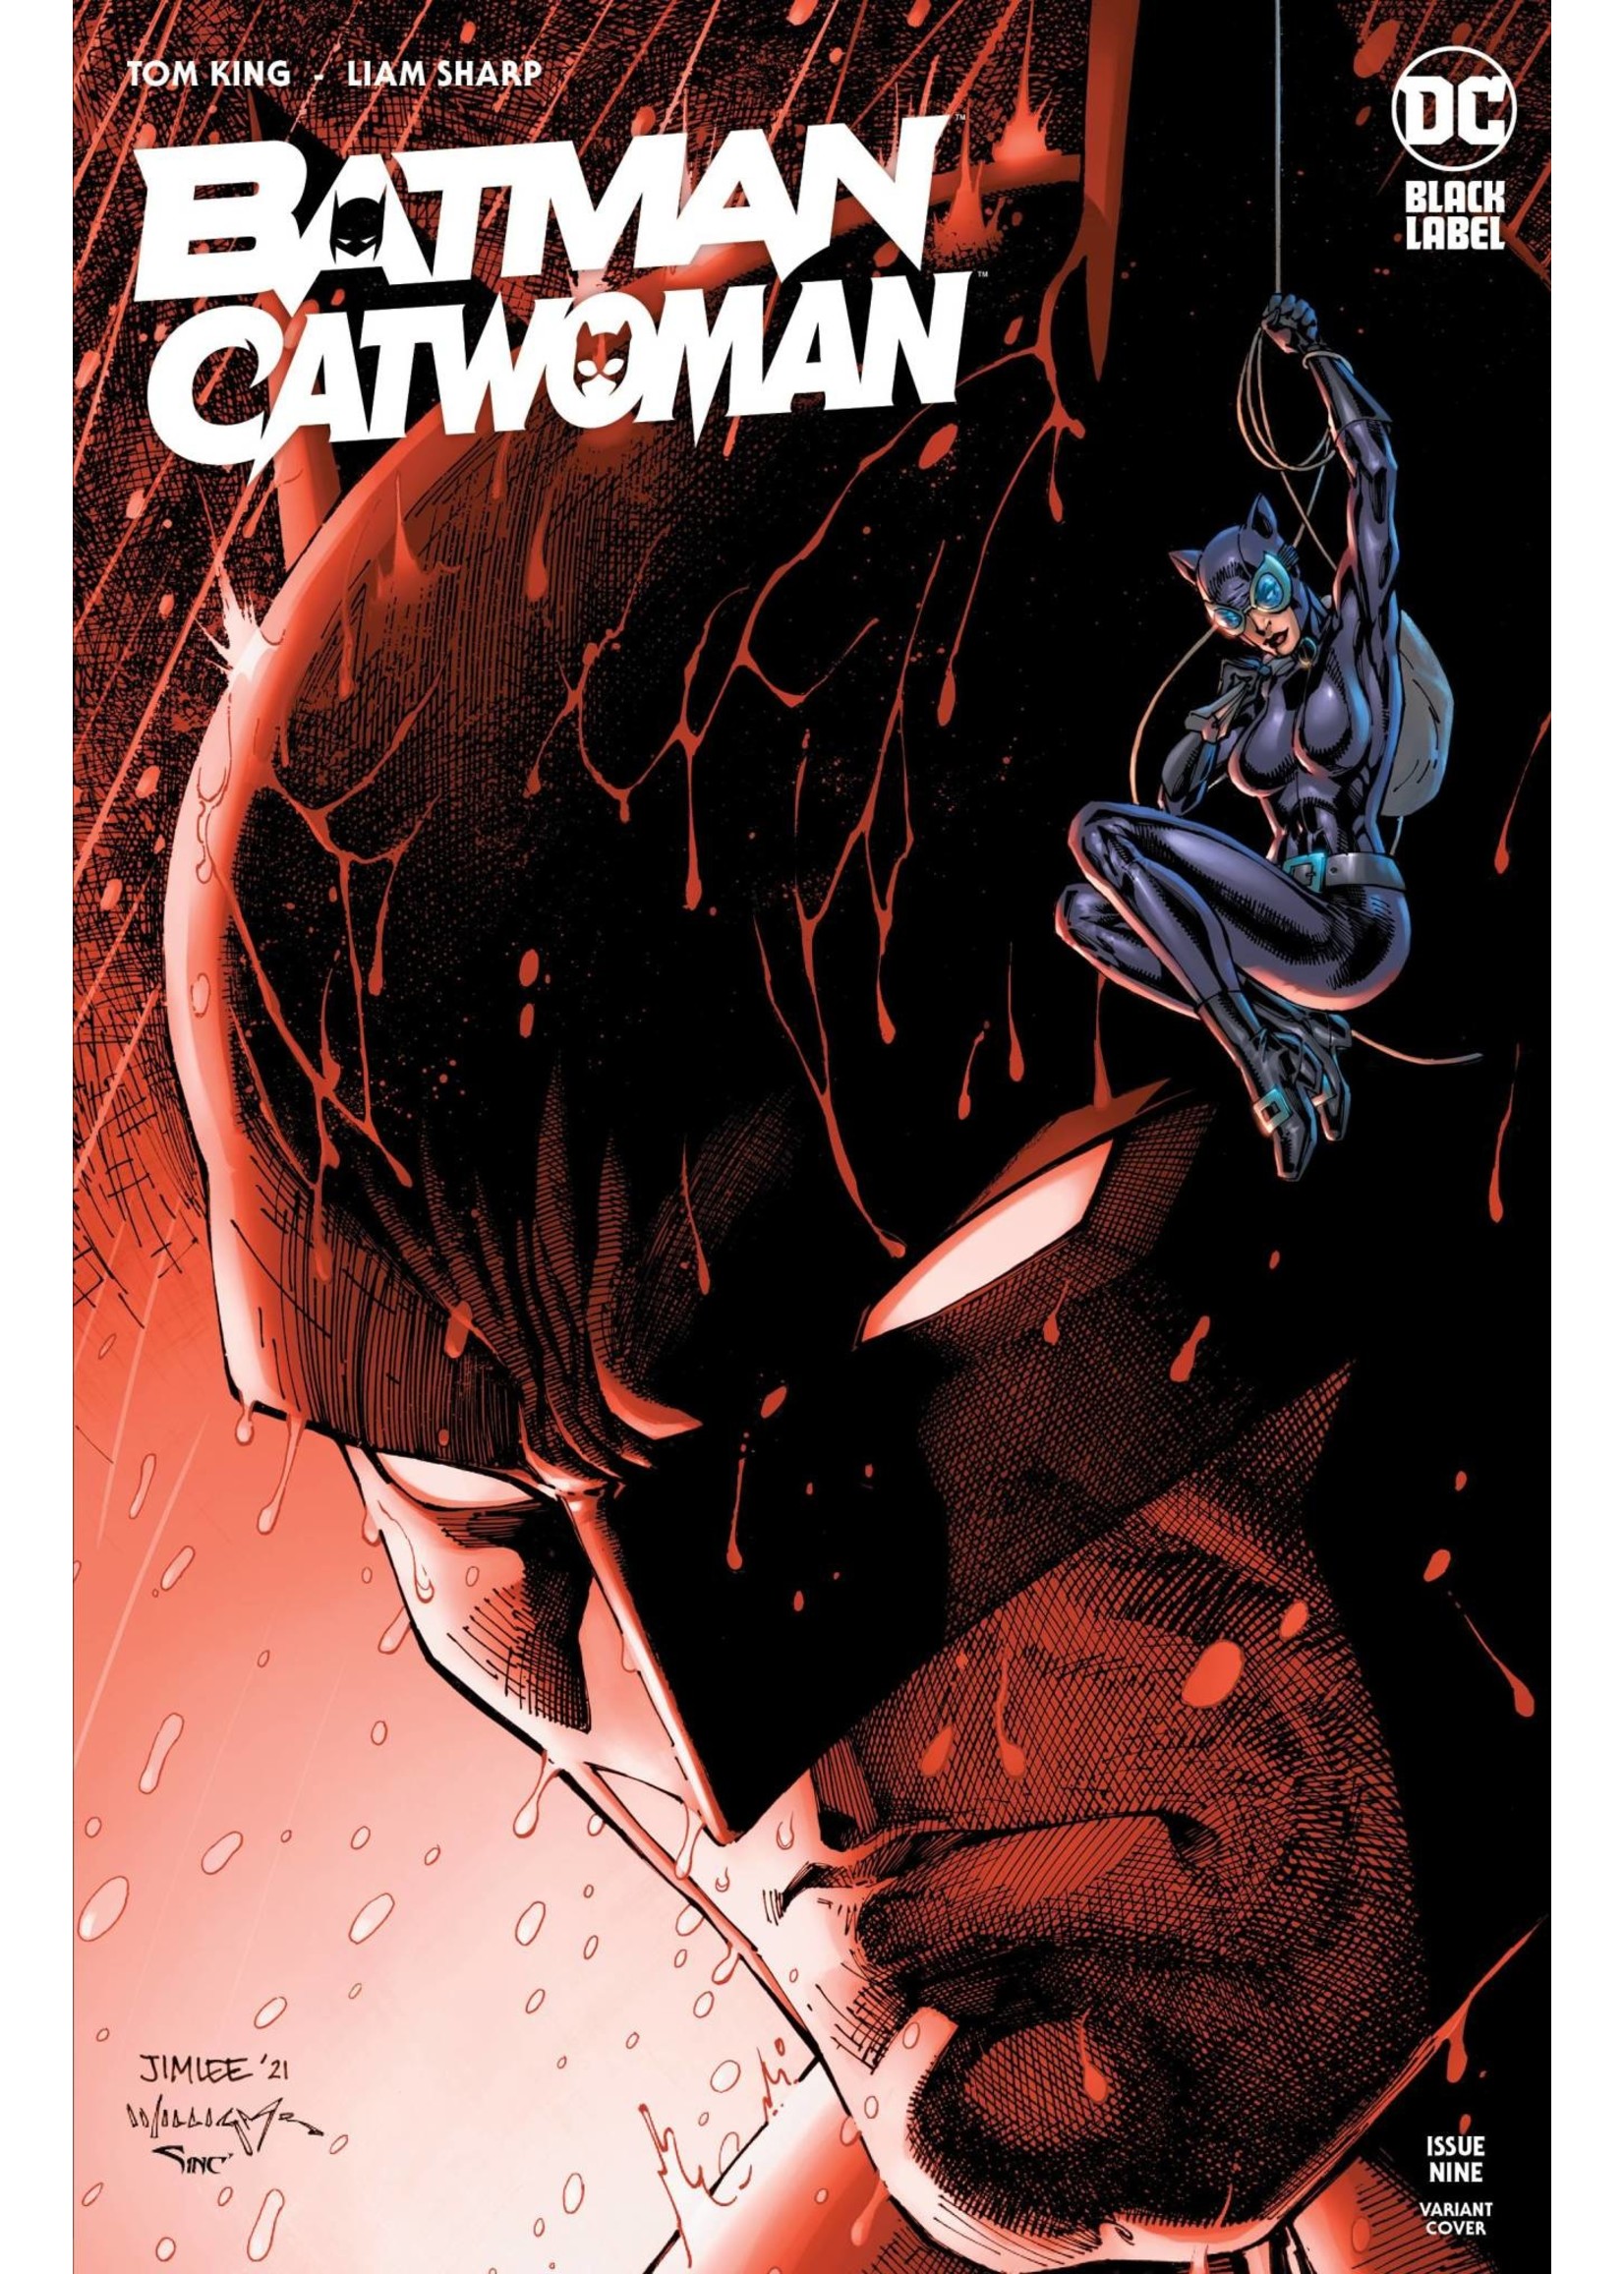 DC COMICS BATMAN CATWOMAN #9 (OF 12) CVR B LEE & WILLIAMS